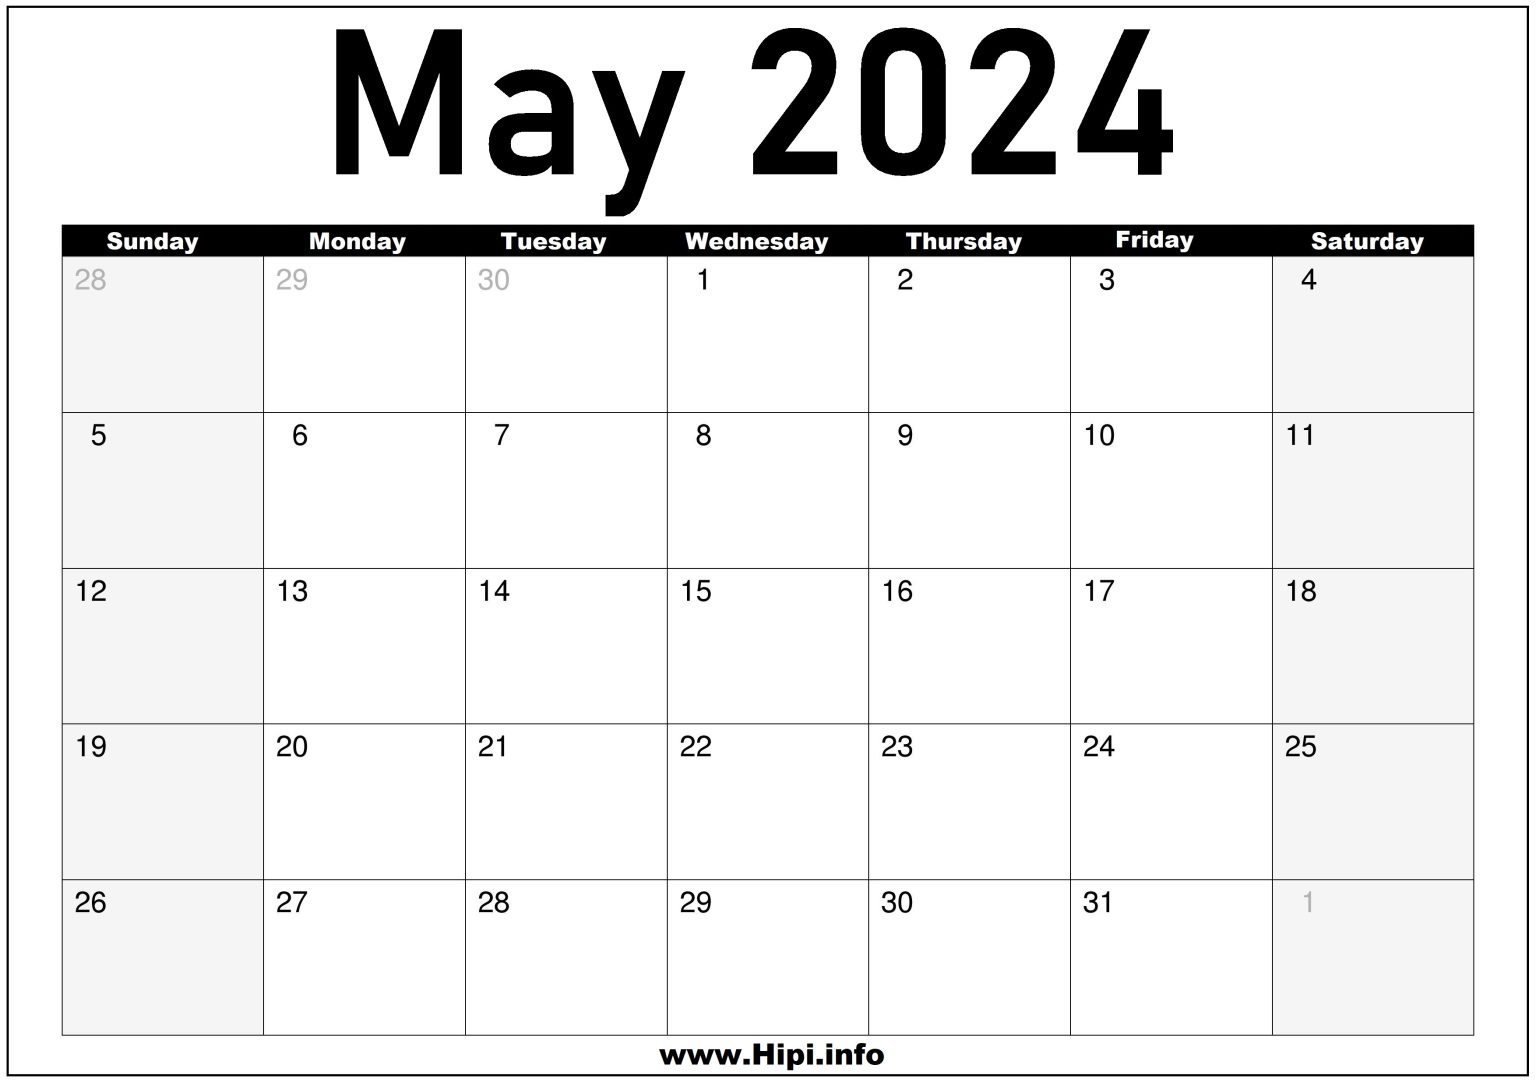 May 2024 Calendar Monthly Hipi.info